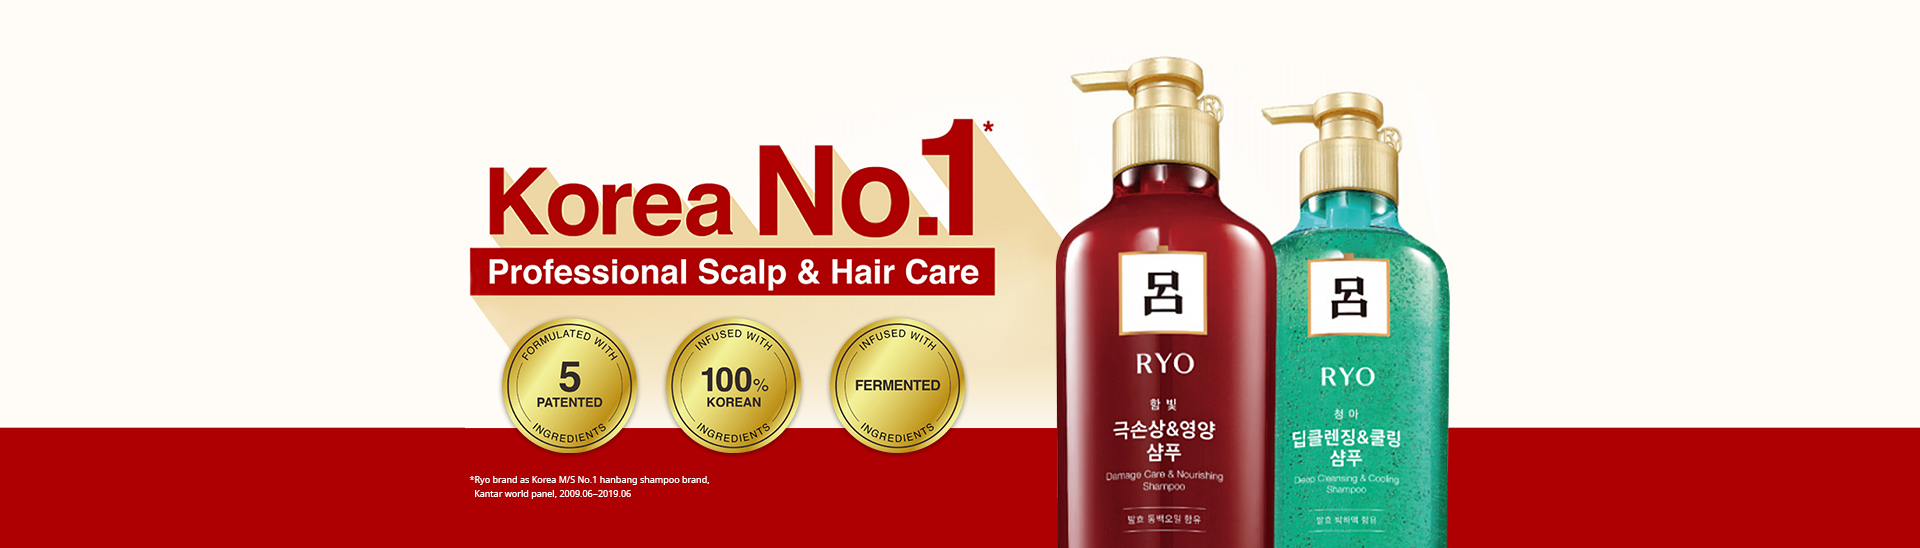 Korea No1 Professional scalp & hair care